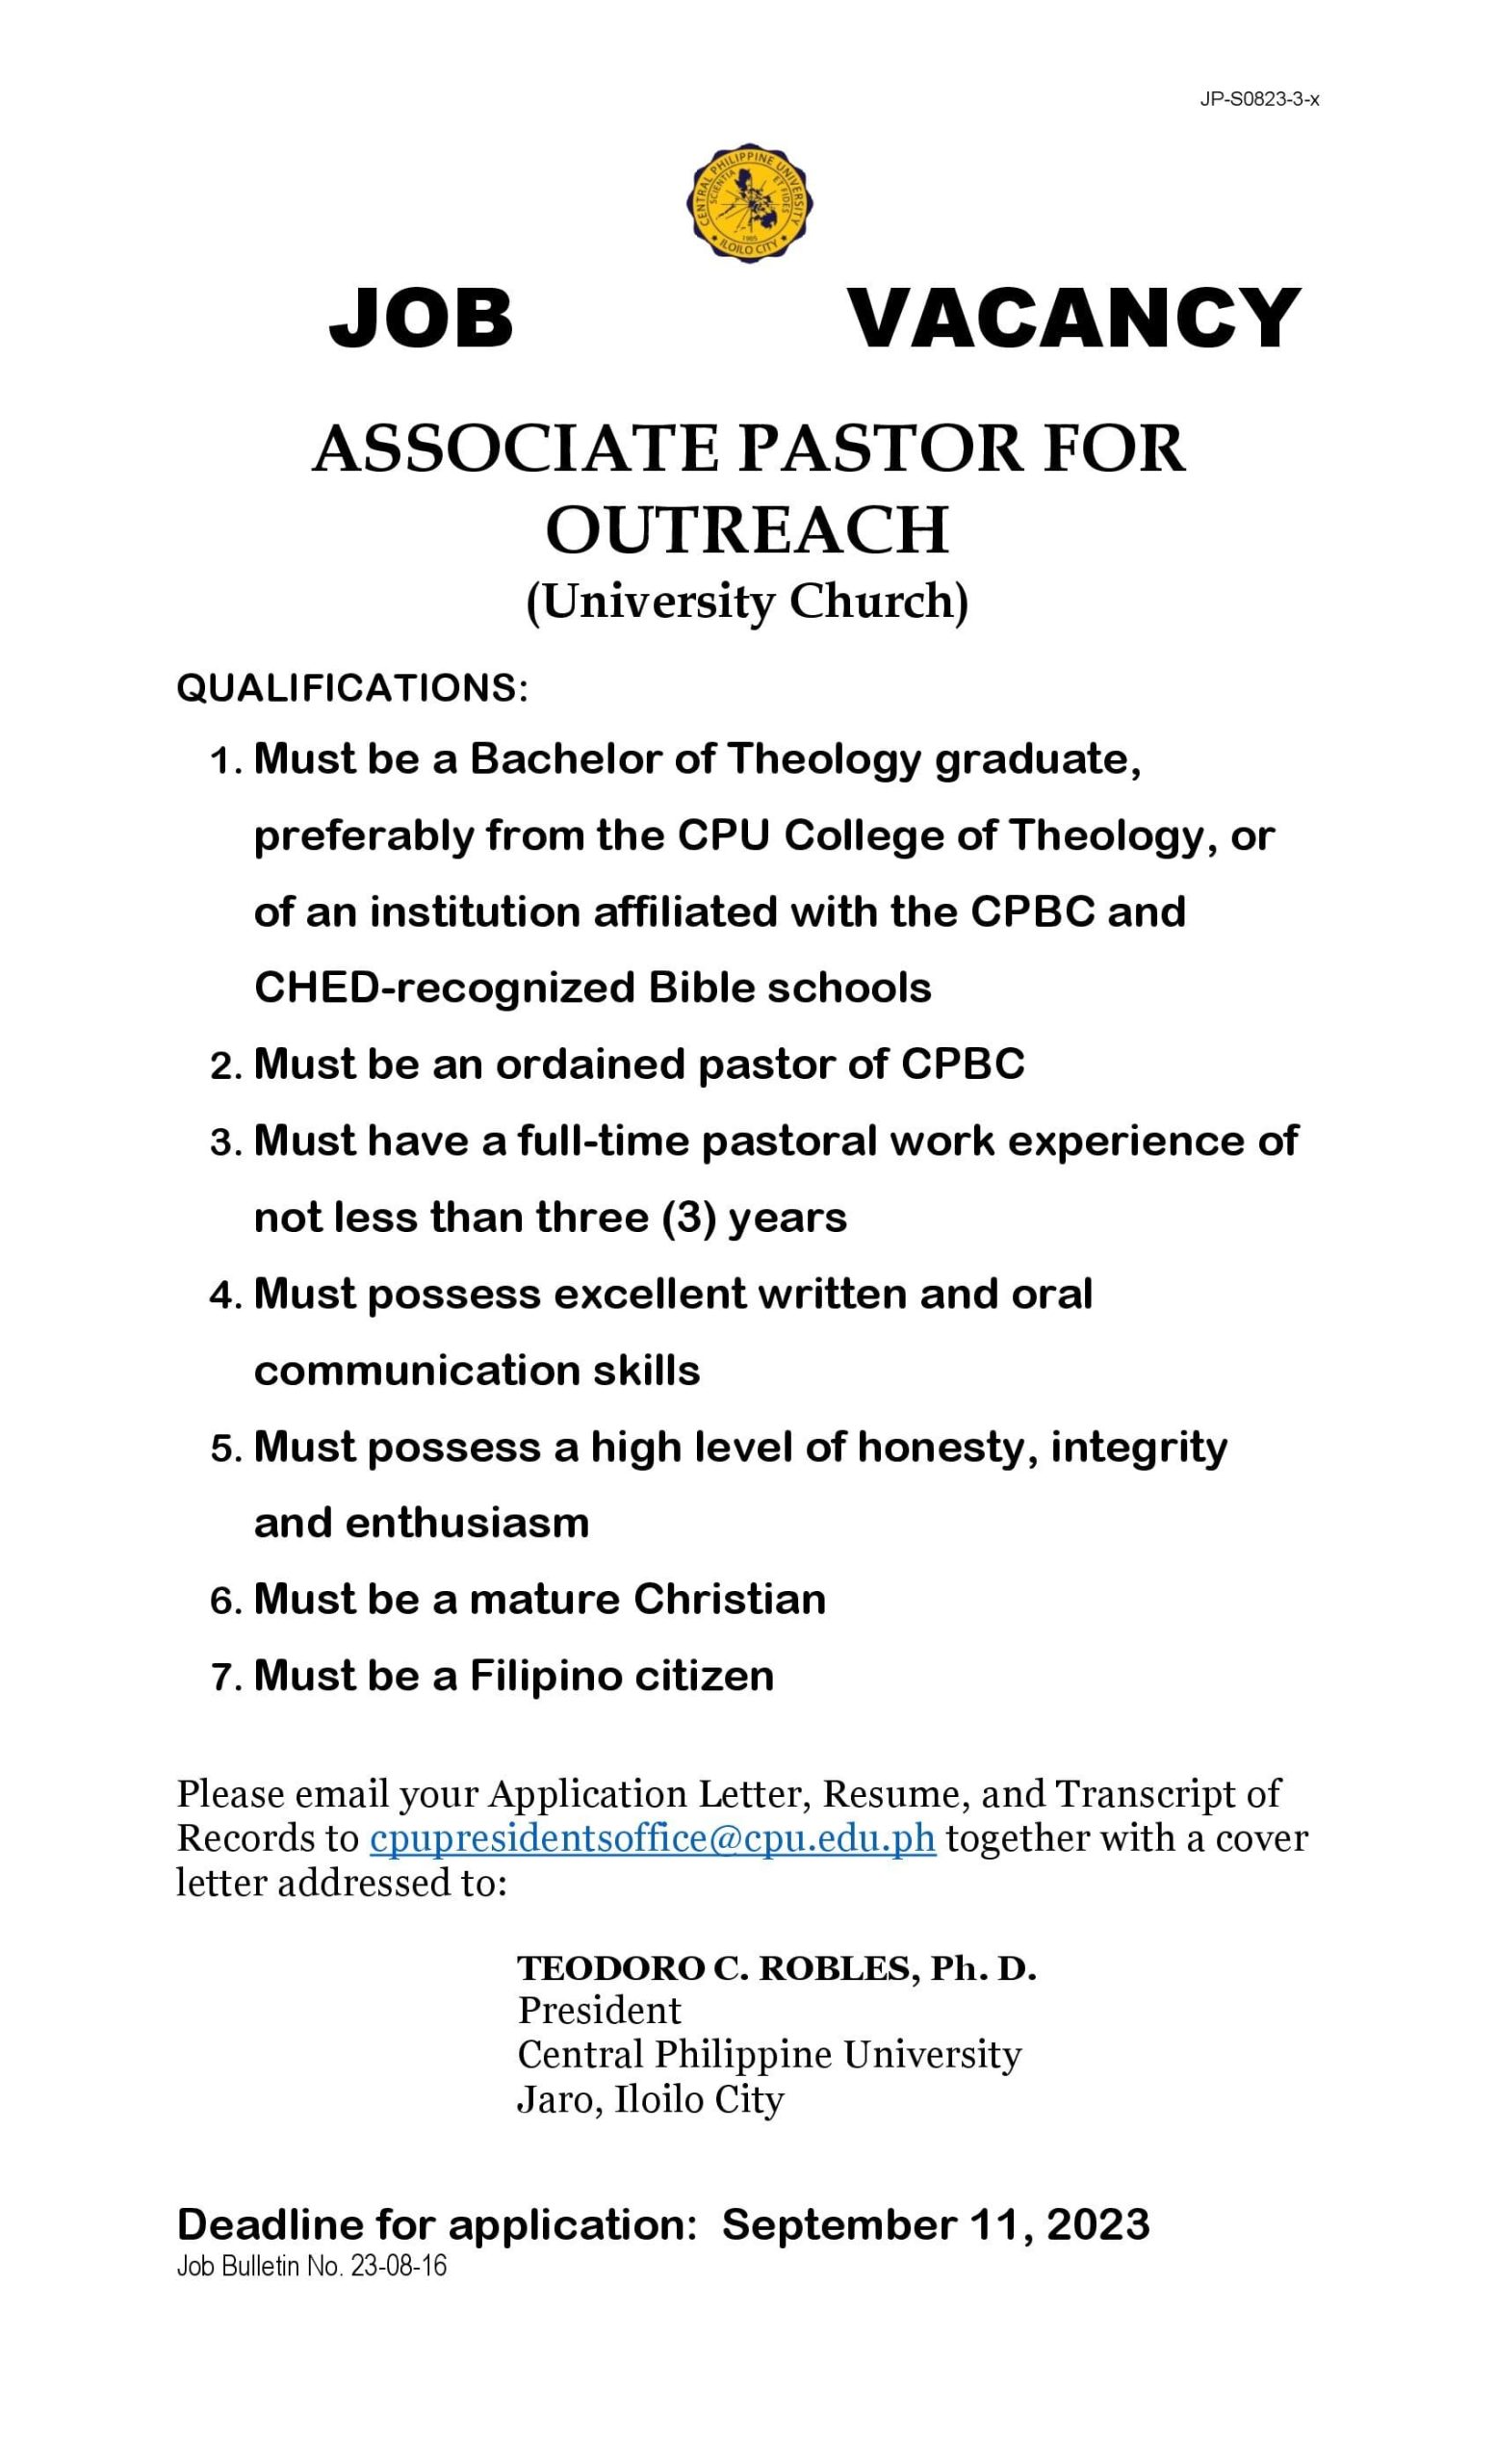 Job Vacancy - Associate Pastor for Outreach (extended deadline)